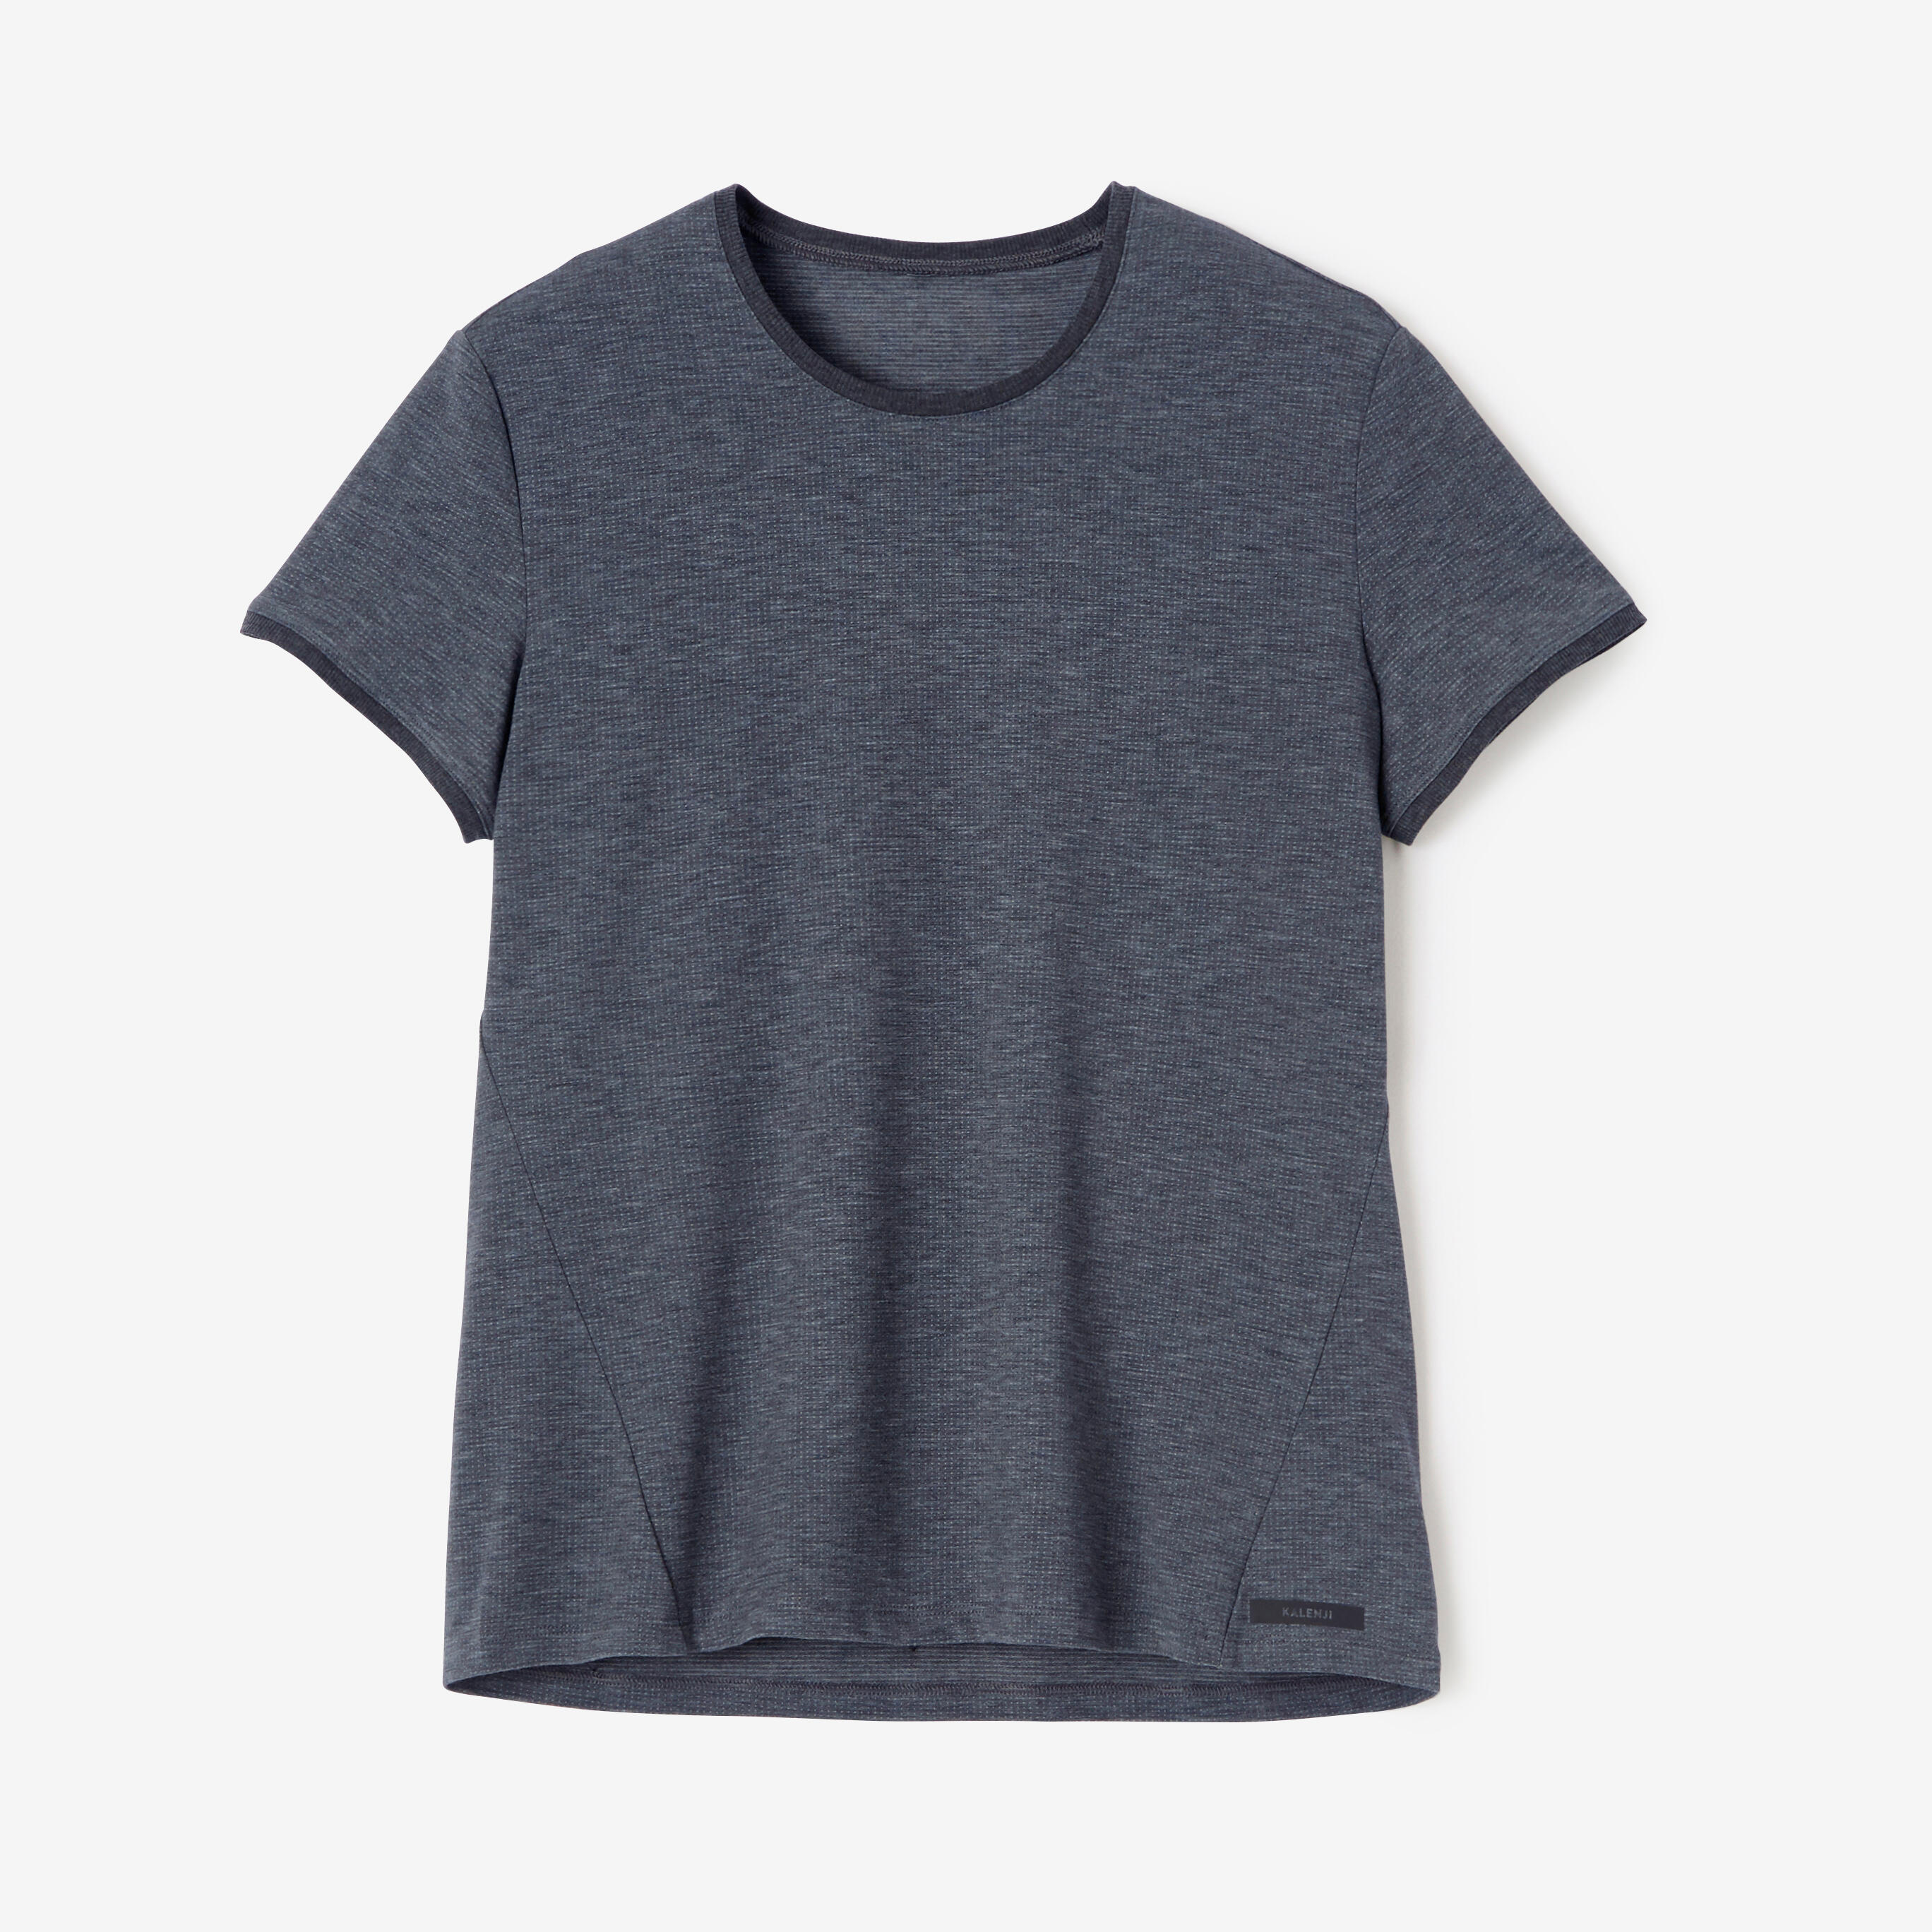 Soft and breathable women's running T-shirt - dark grey 8/10